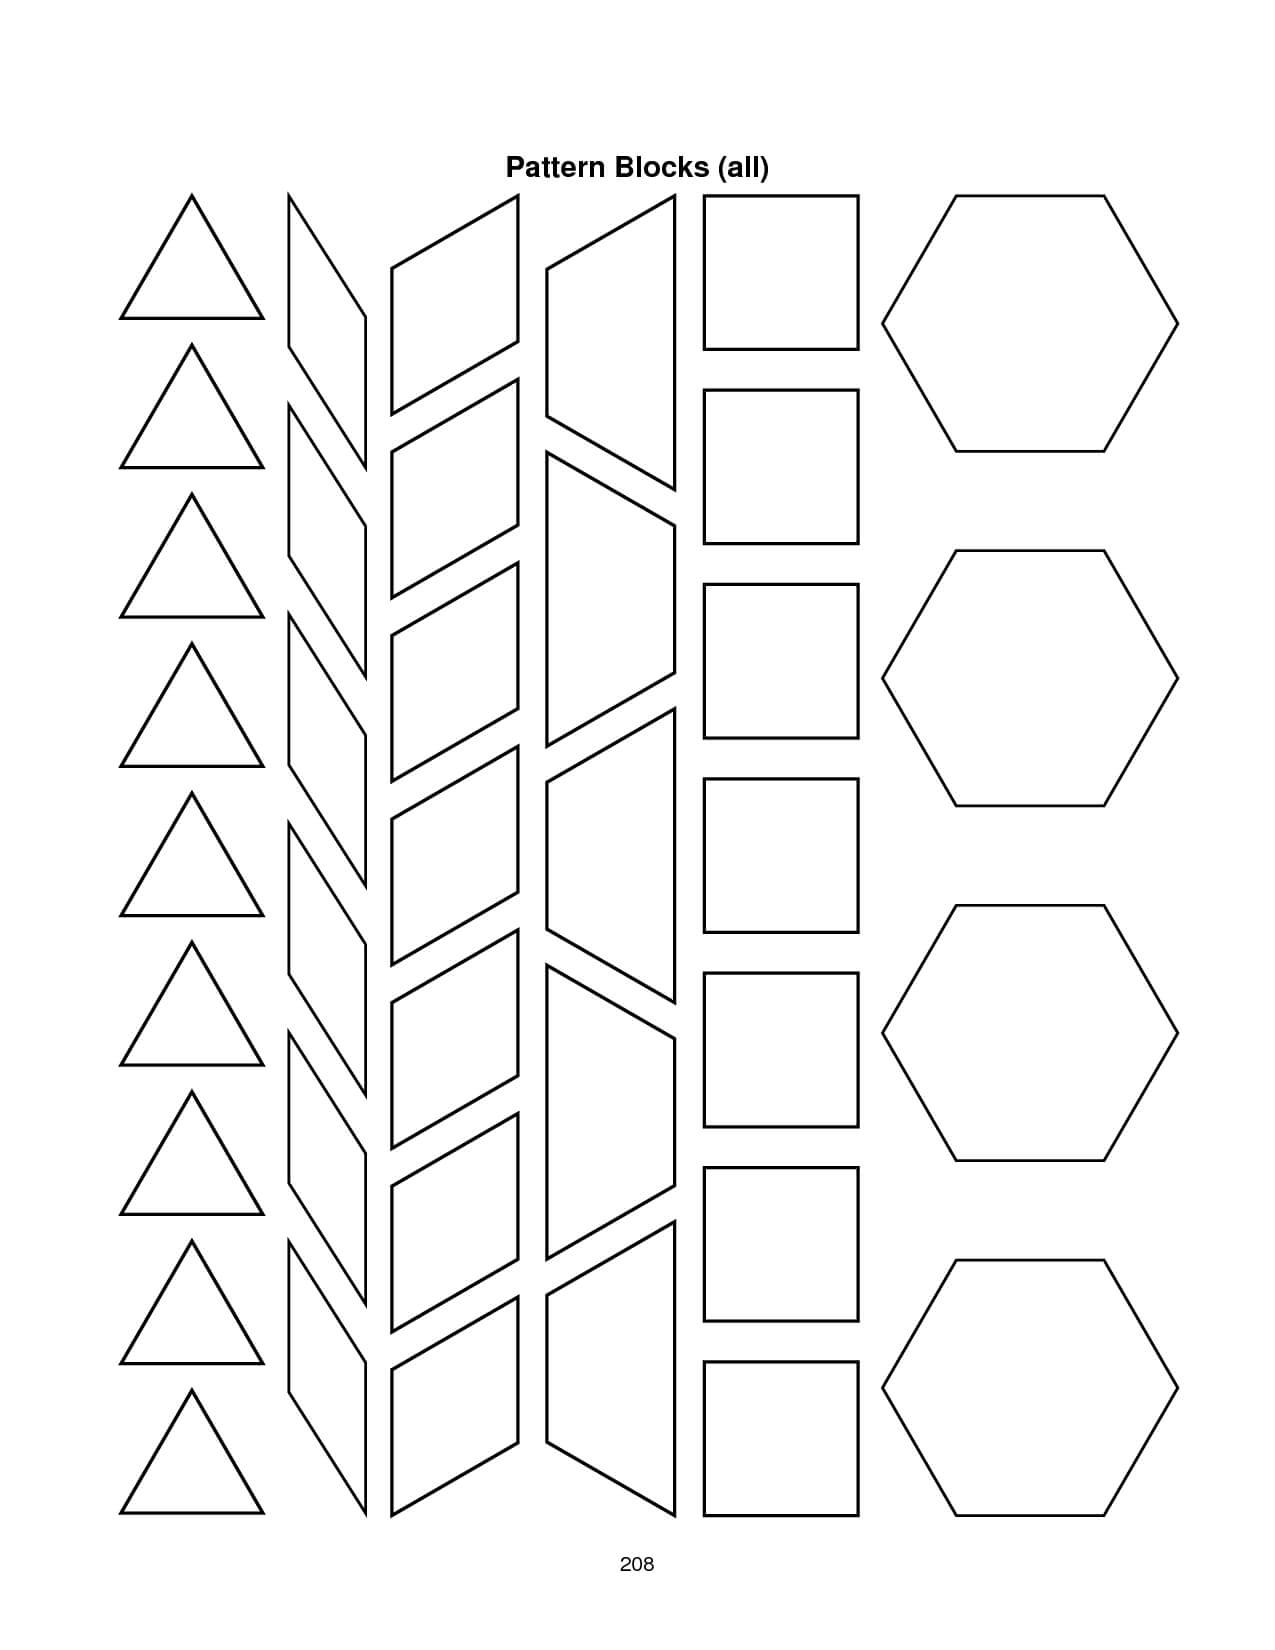 28 Images Of Blank Alphabet Pattern Block Template | Migapps Within Blank Pattern Block Templates